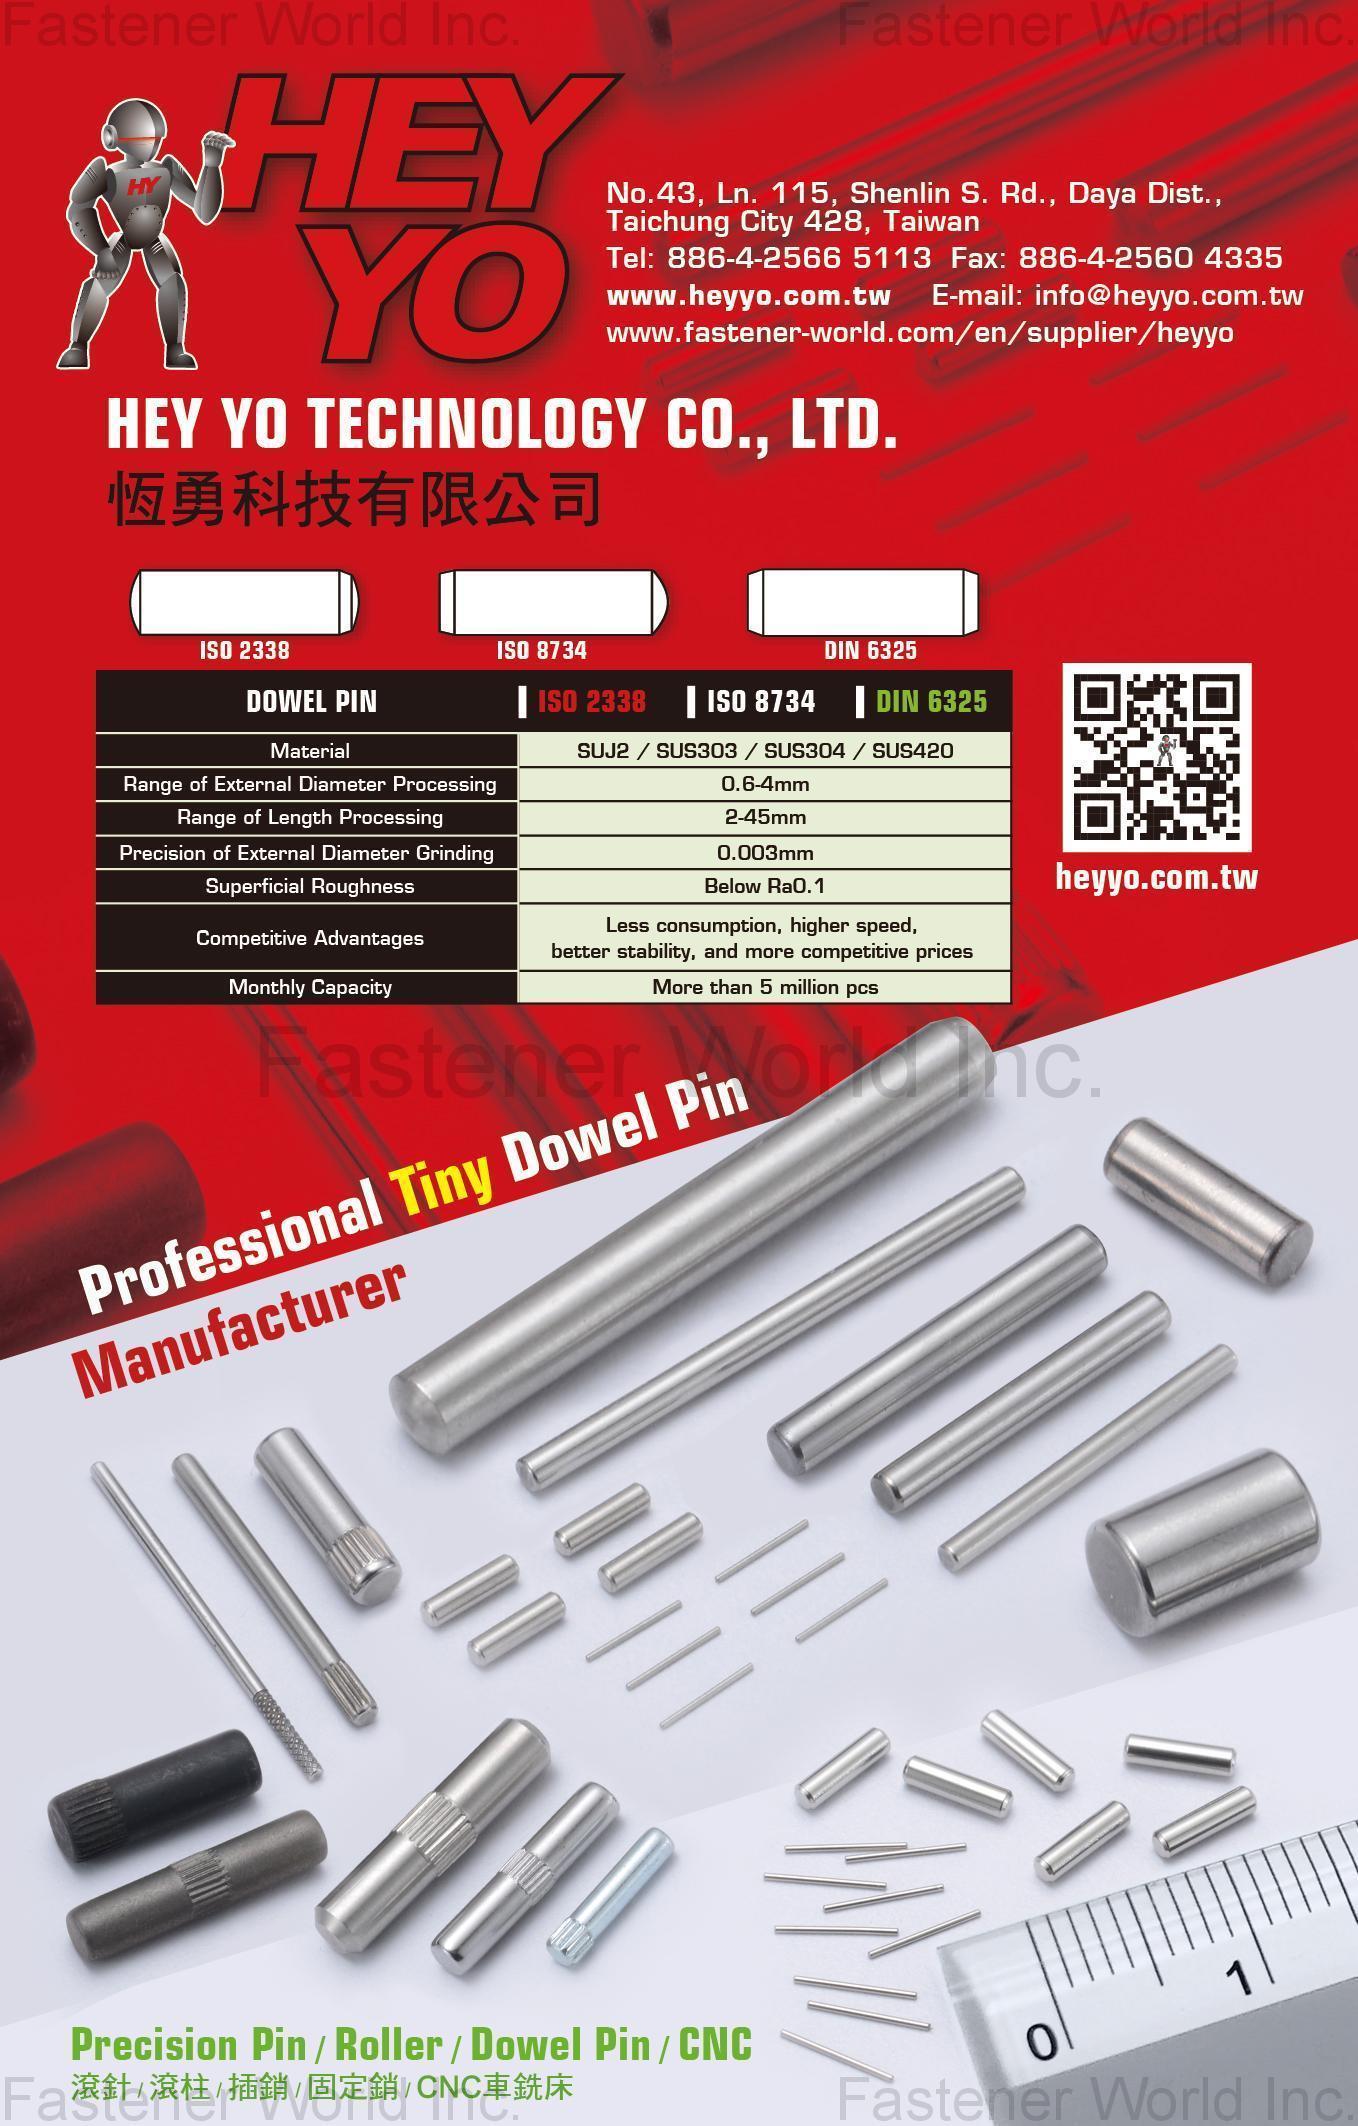 HEY YO TECHNOLOGY CO., LTD. , Tiny Dowel Pin, Precision Pin, Roller, CNC